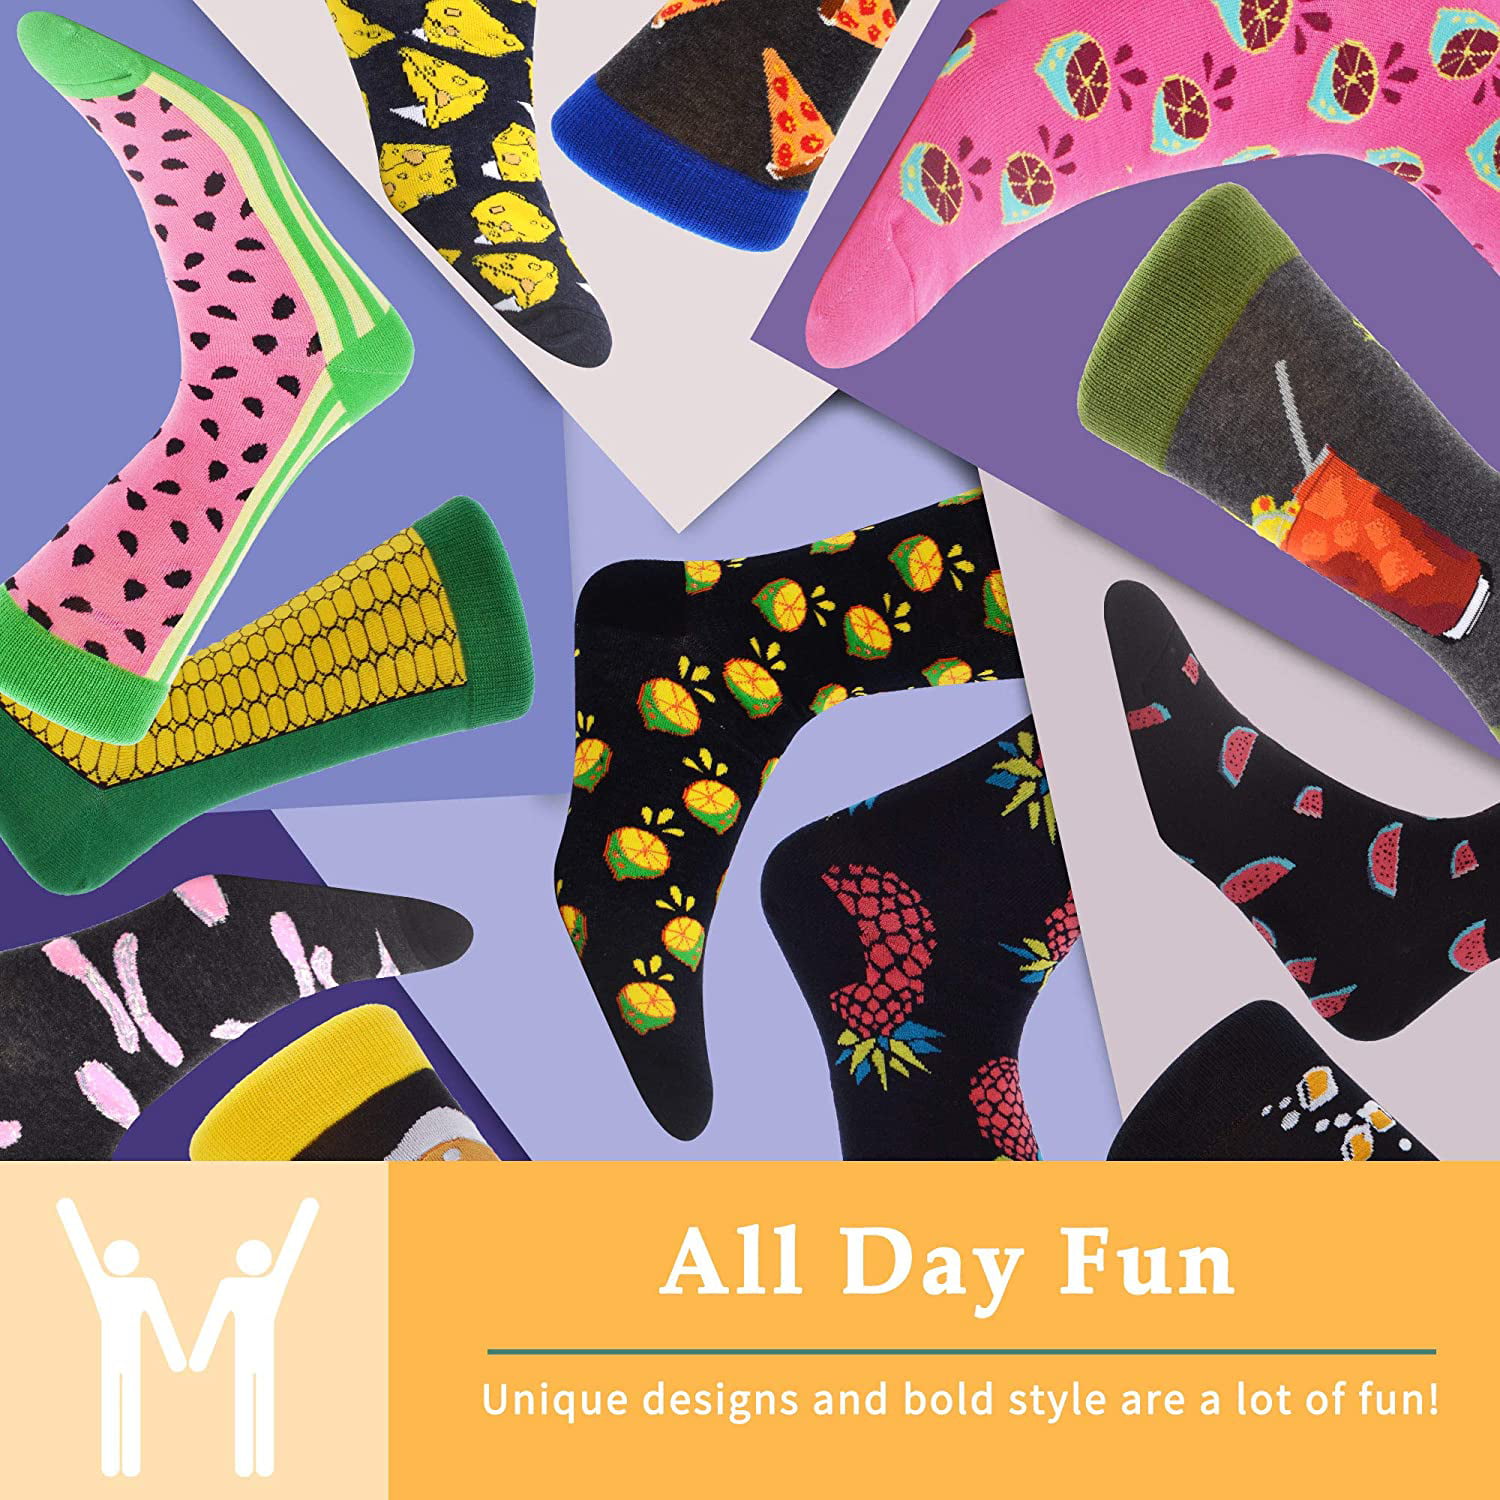 MAKABO Fun Casual Socks For Men Colorful Patterned Funny Novelty Dress Crew Socks 12 Packs 